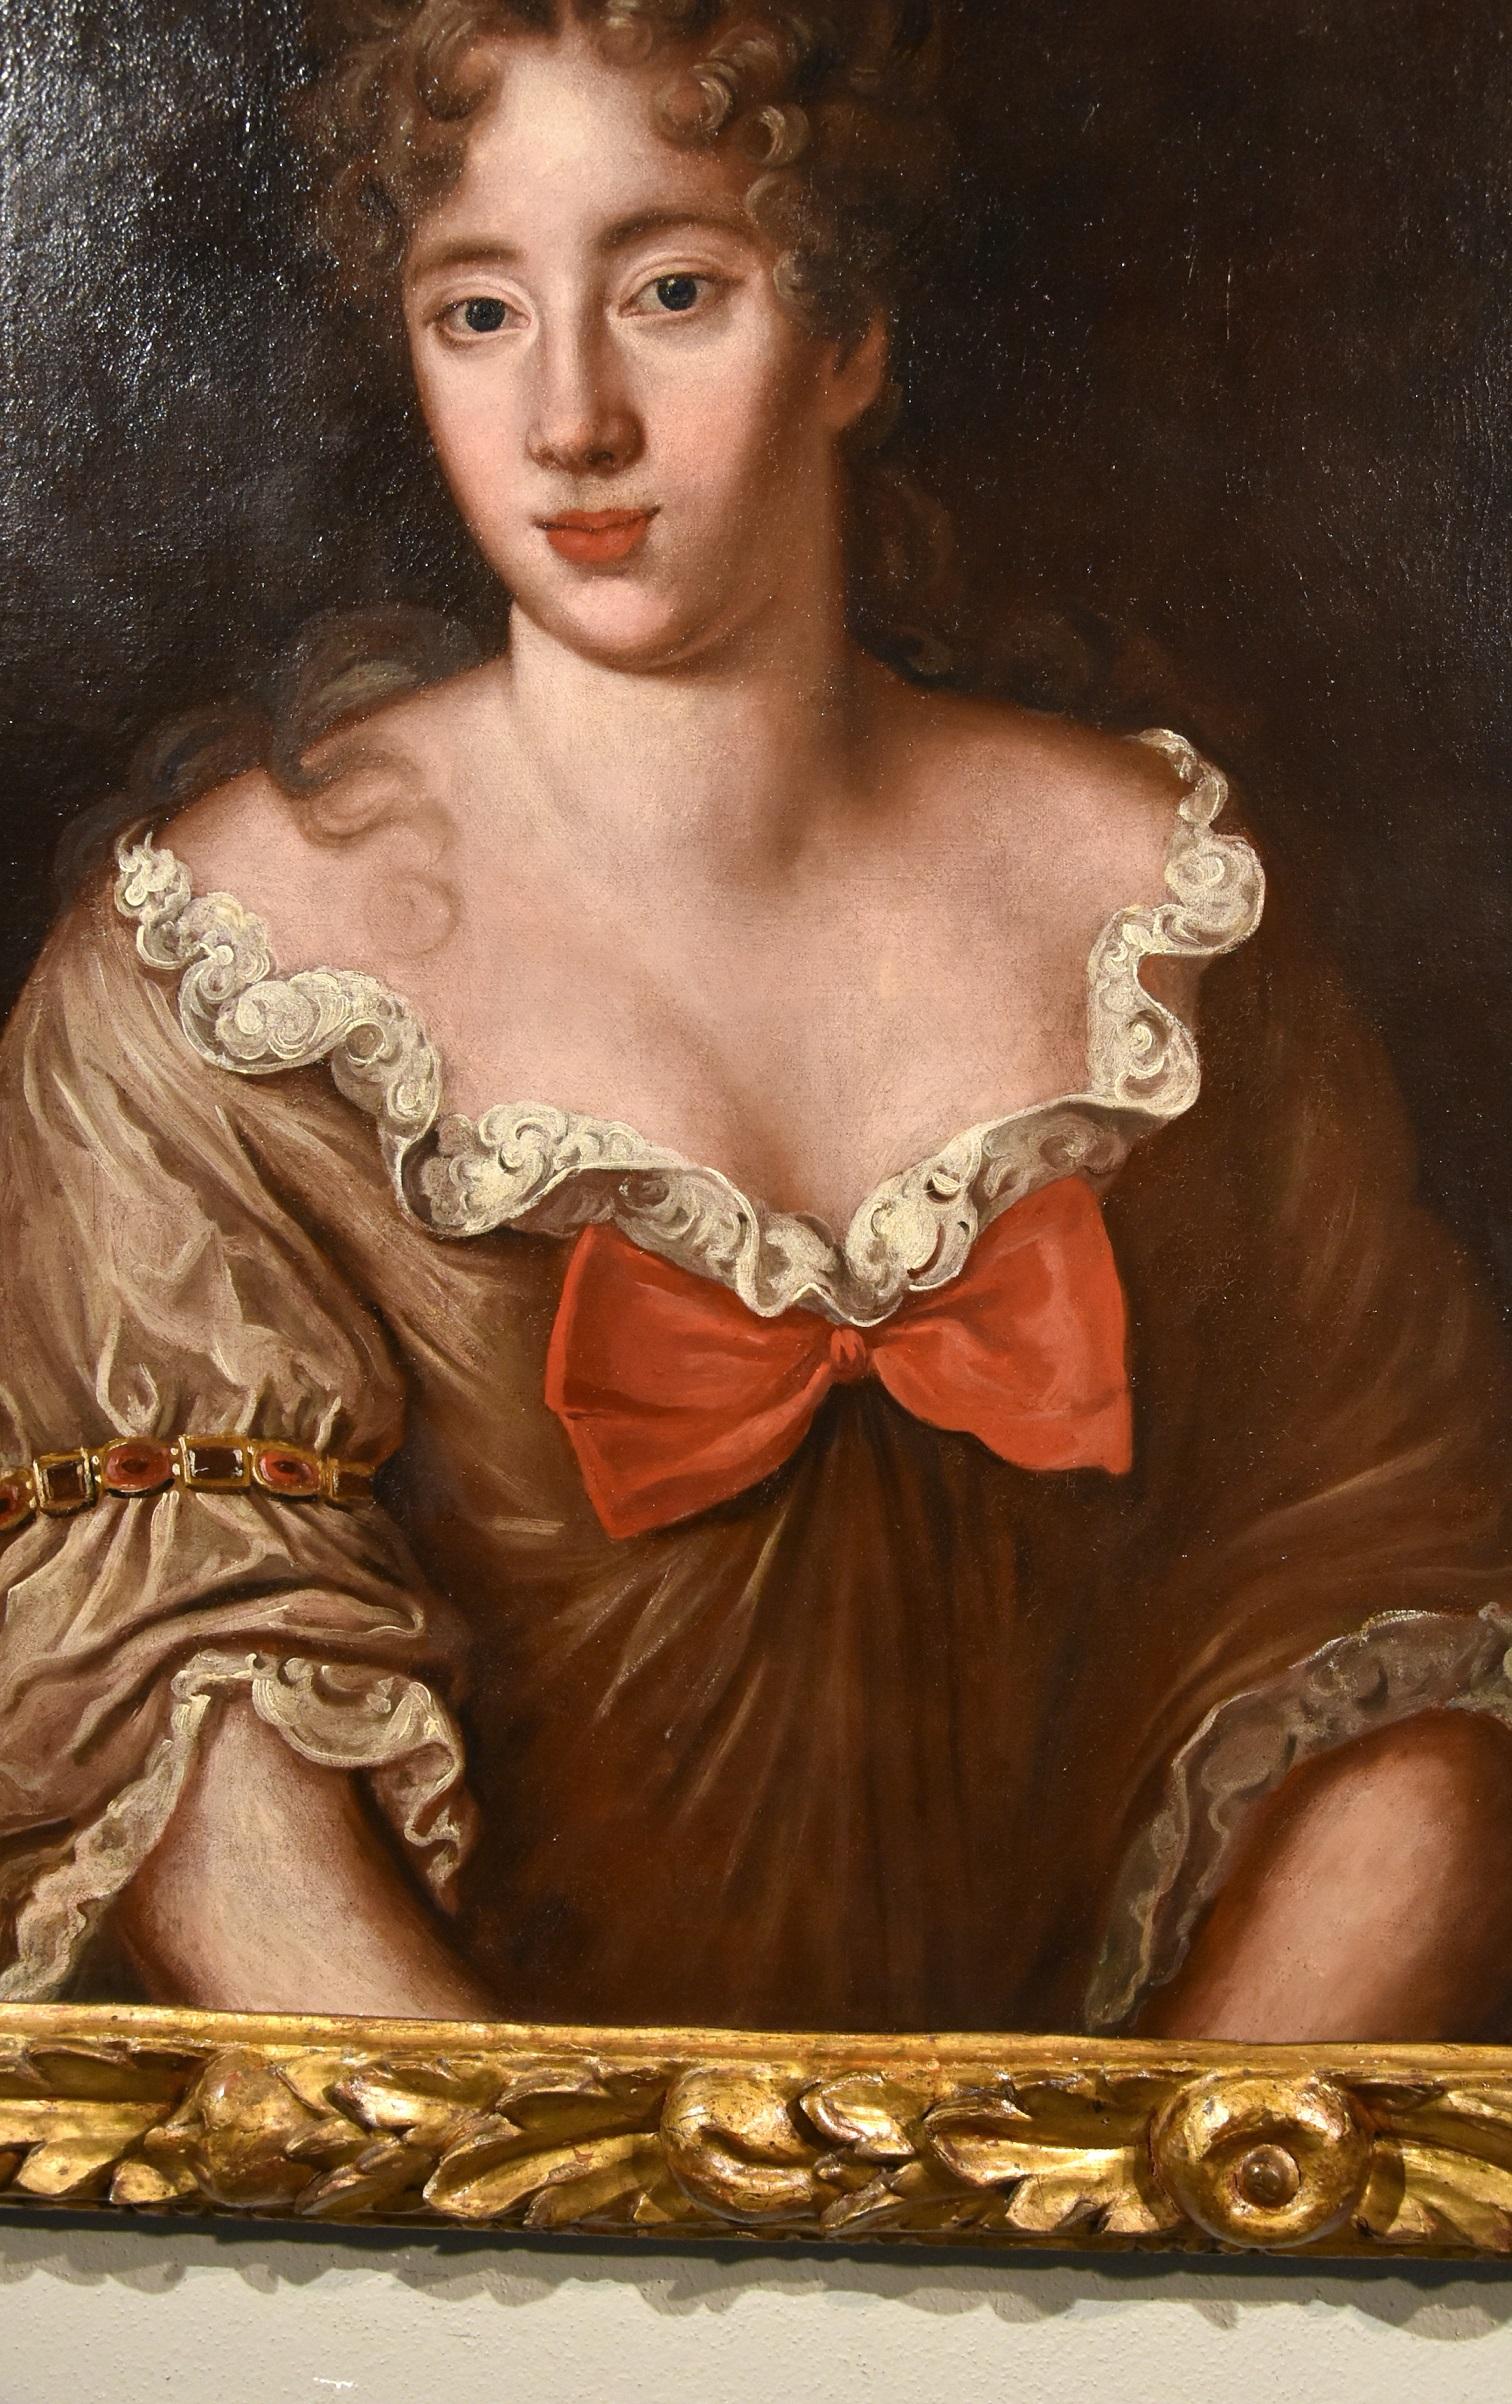 Portrait Woman Voet Paint Oil on canvas Old master 17/18th Century Flemish Art - Old Masters Painting by Jacob Ferdinand Voet (Antwerp 1639 - Paris 1689)